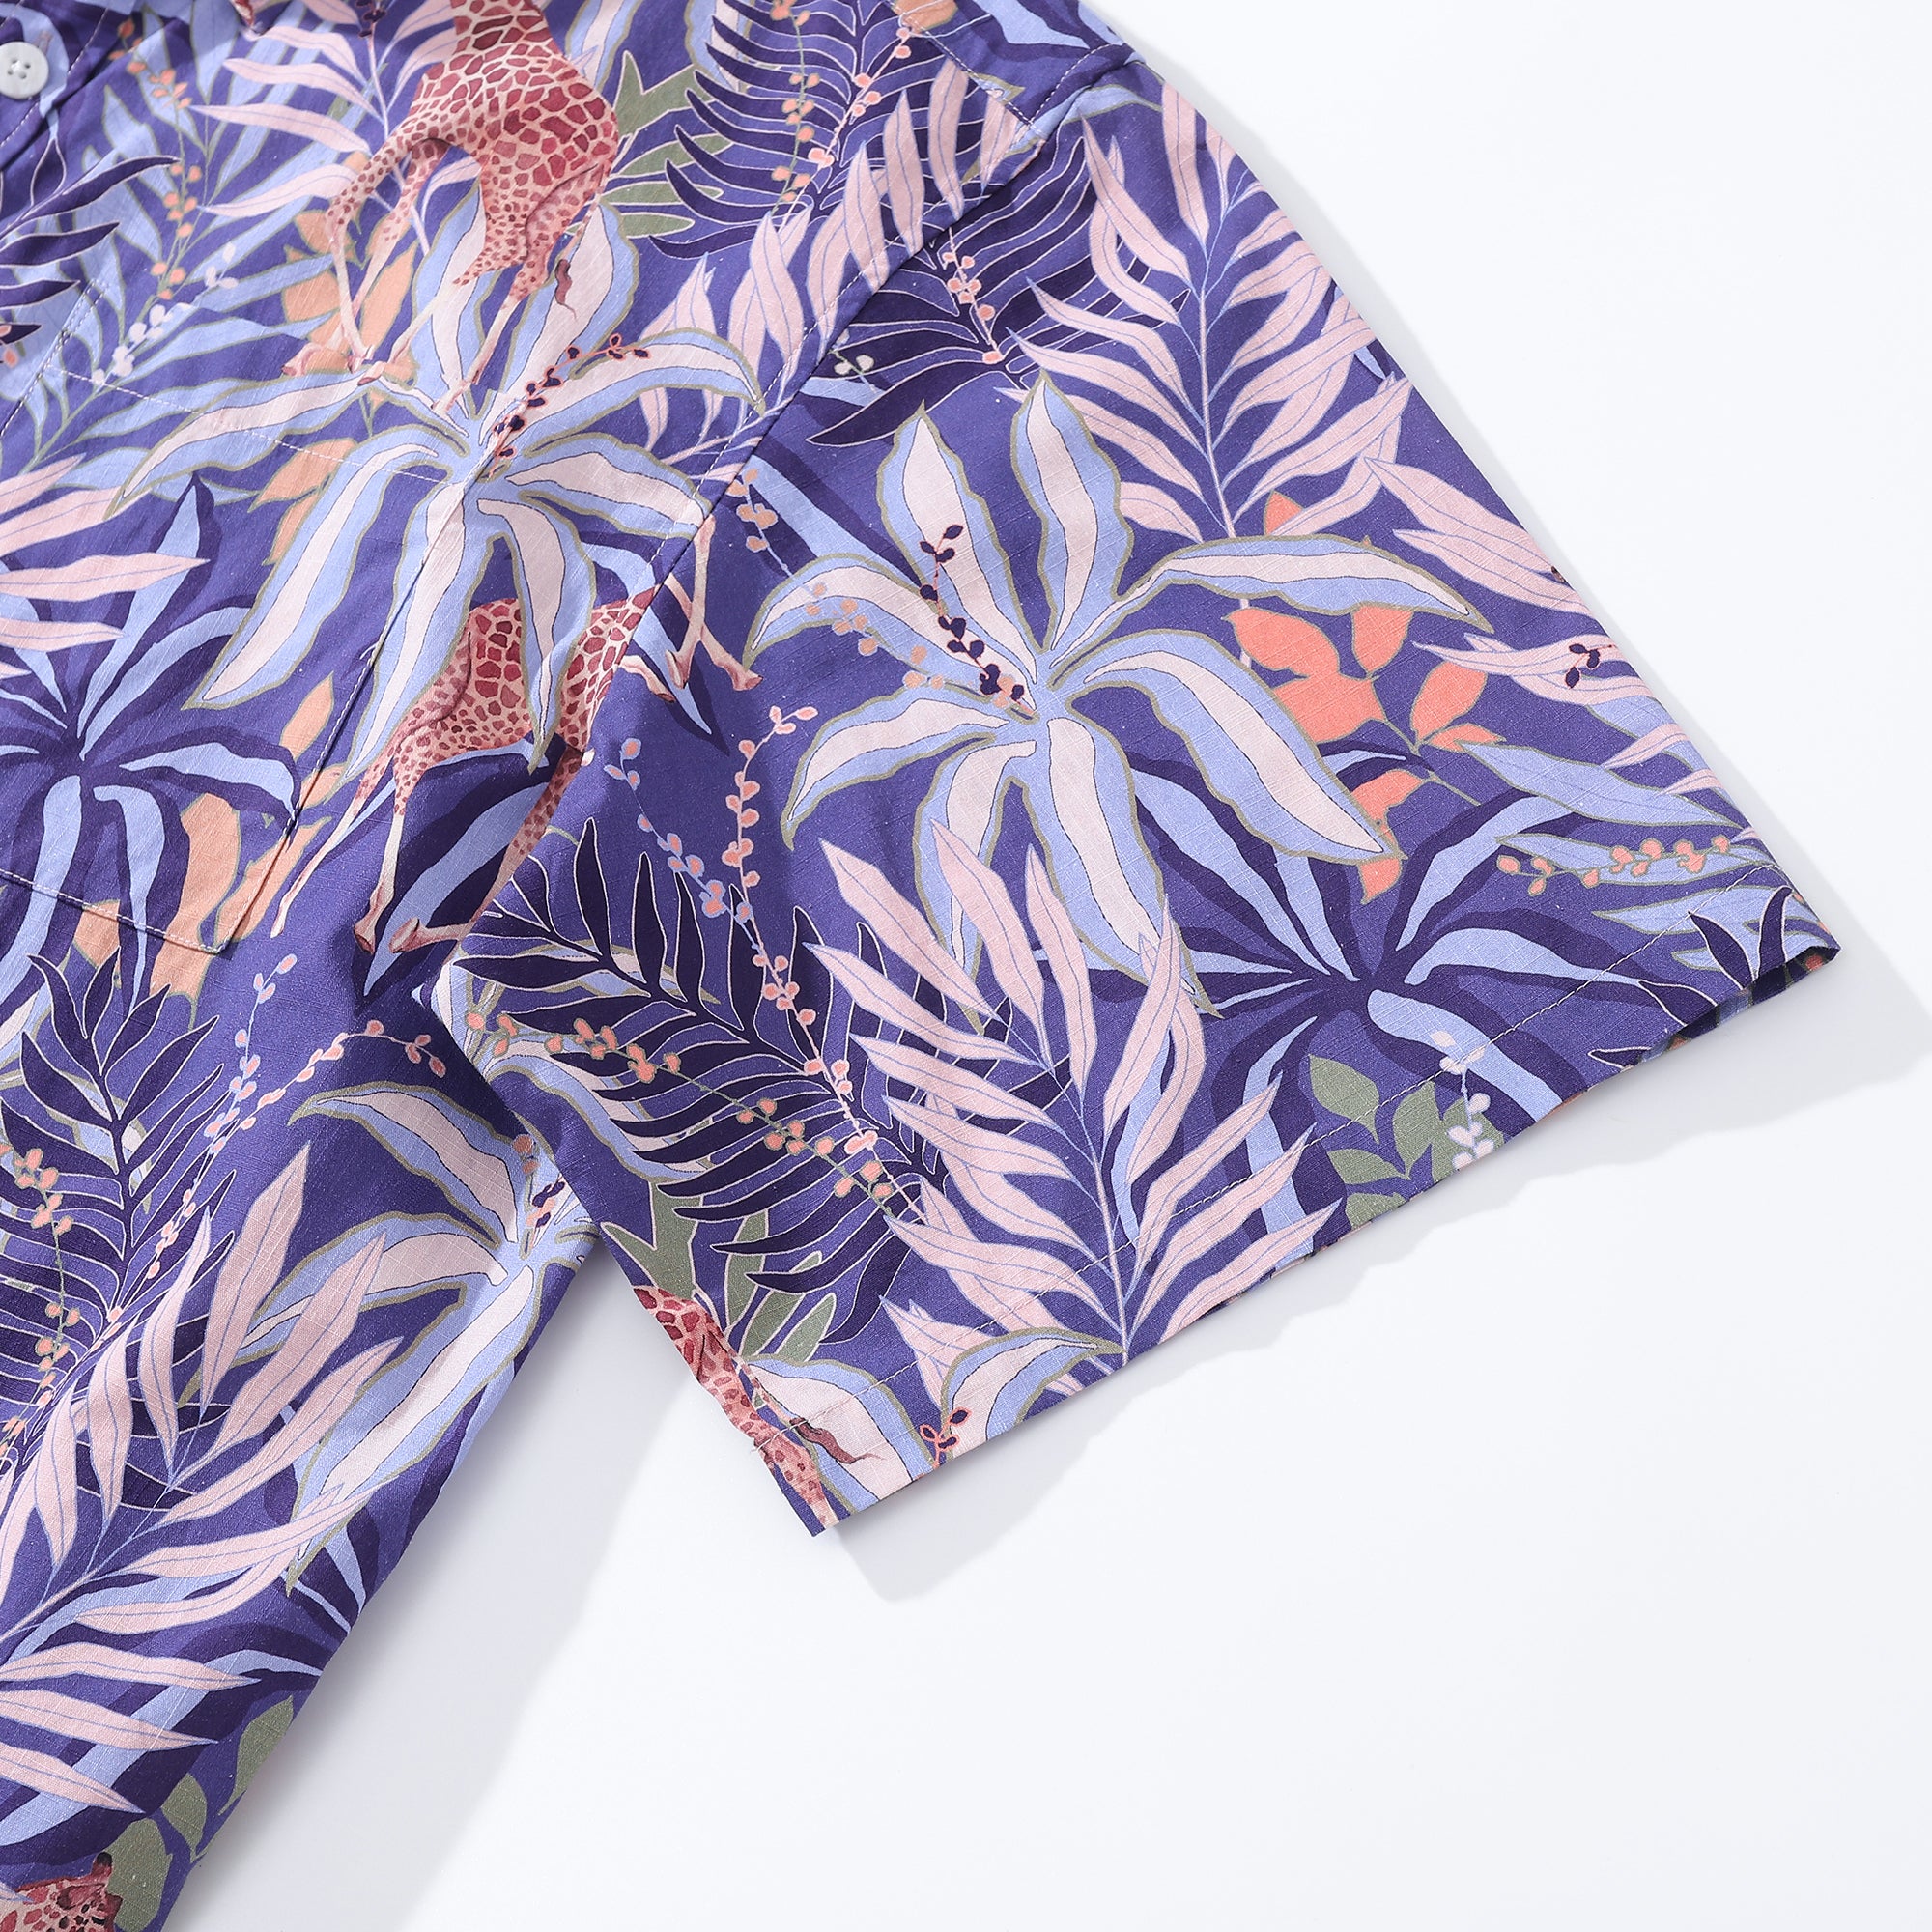 Men's Hawaiian Shirt Tropical Giraffe Print By Samantha O' Malley Cotton Button-down Short Sleeve Aloha Shirt